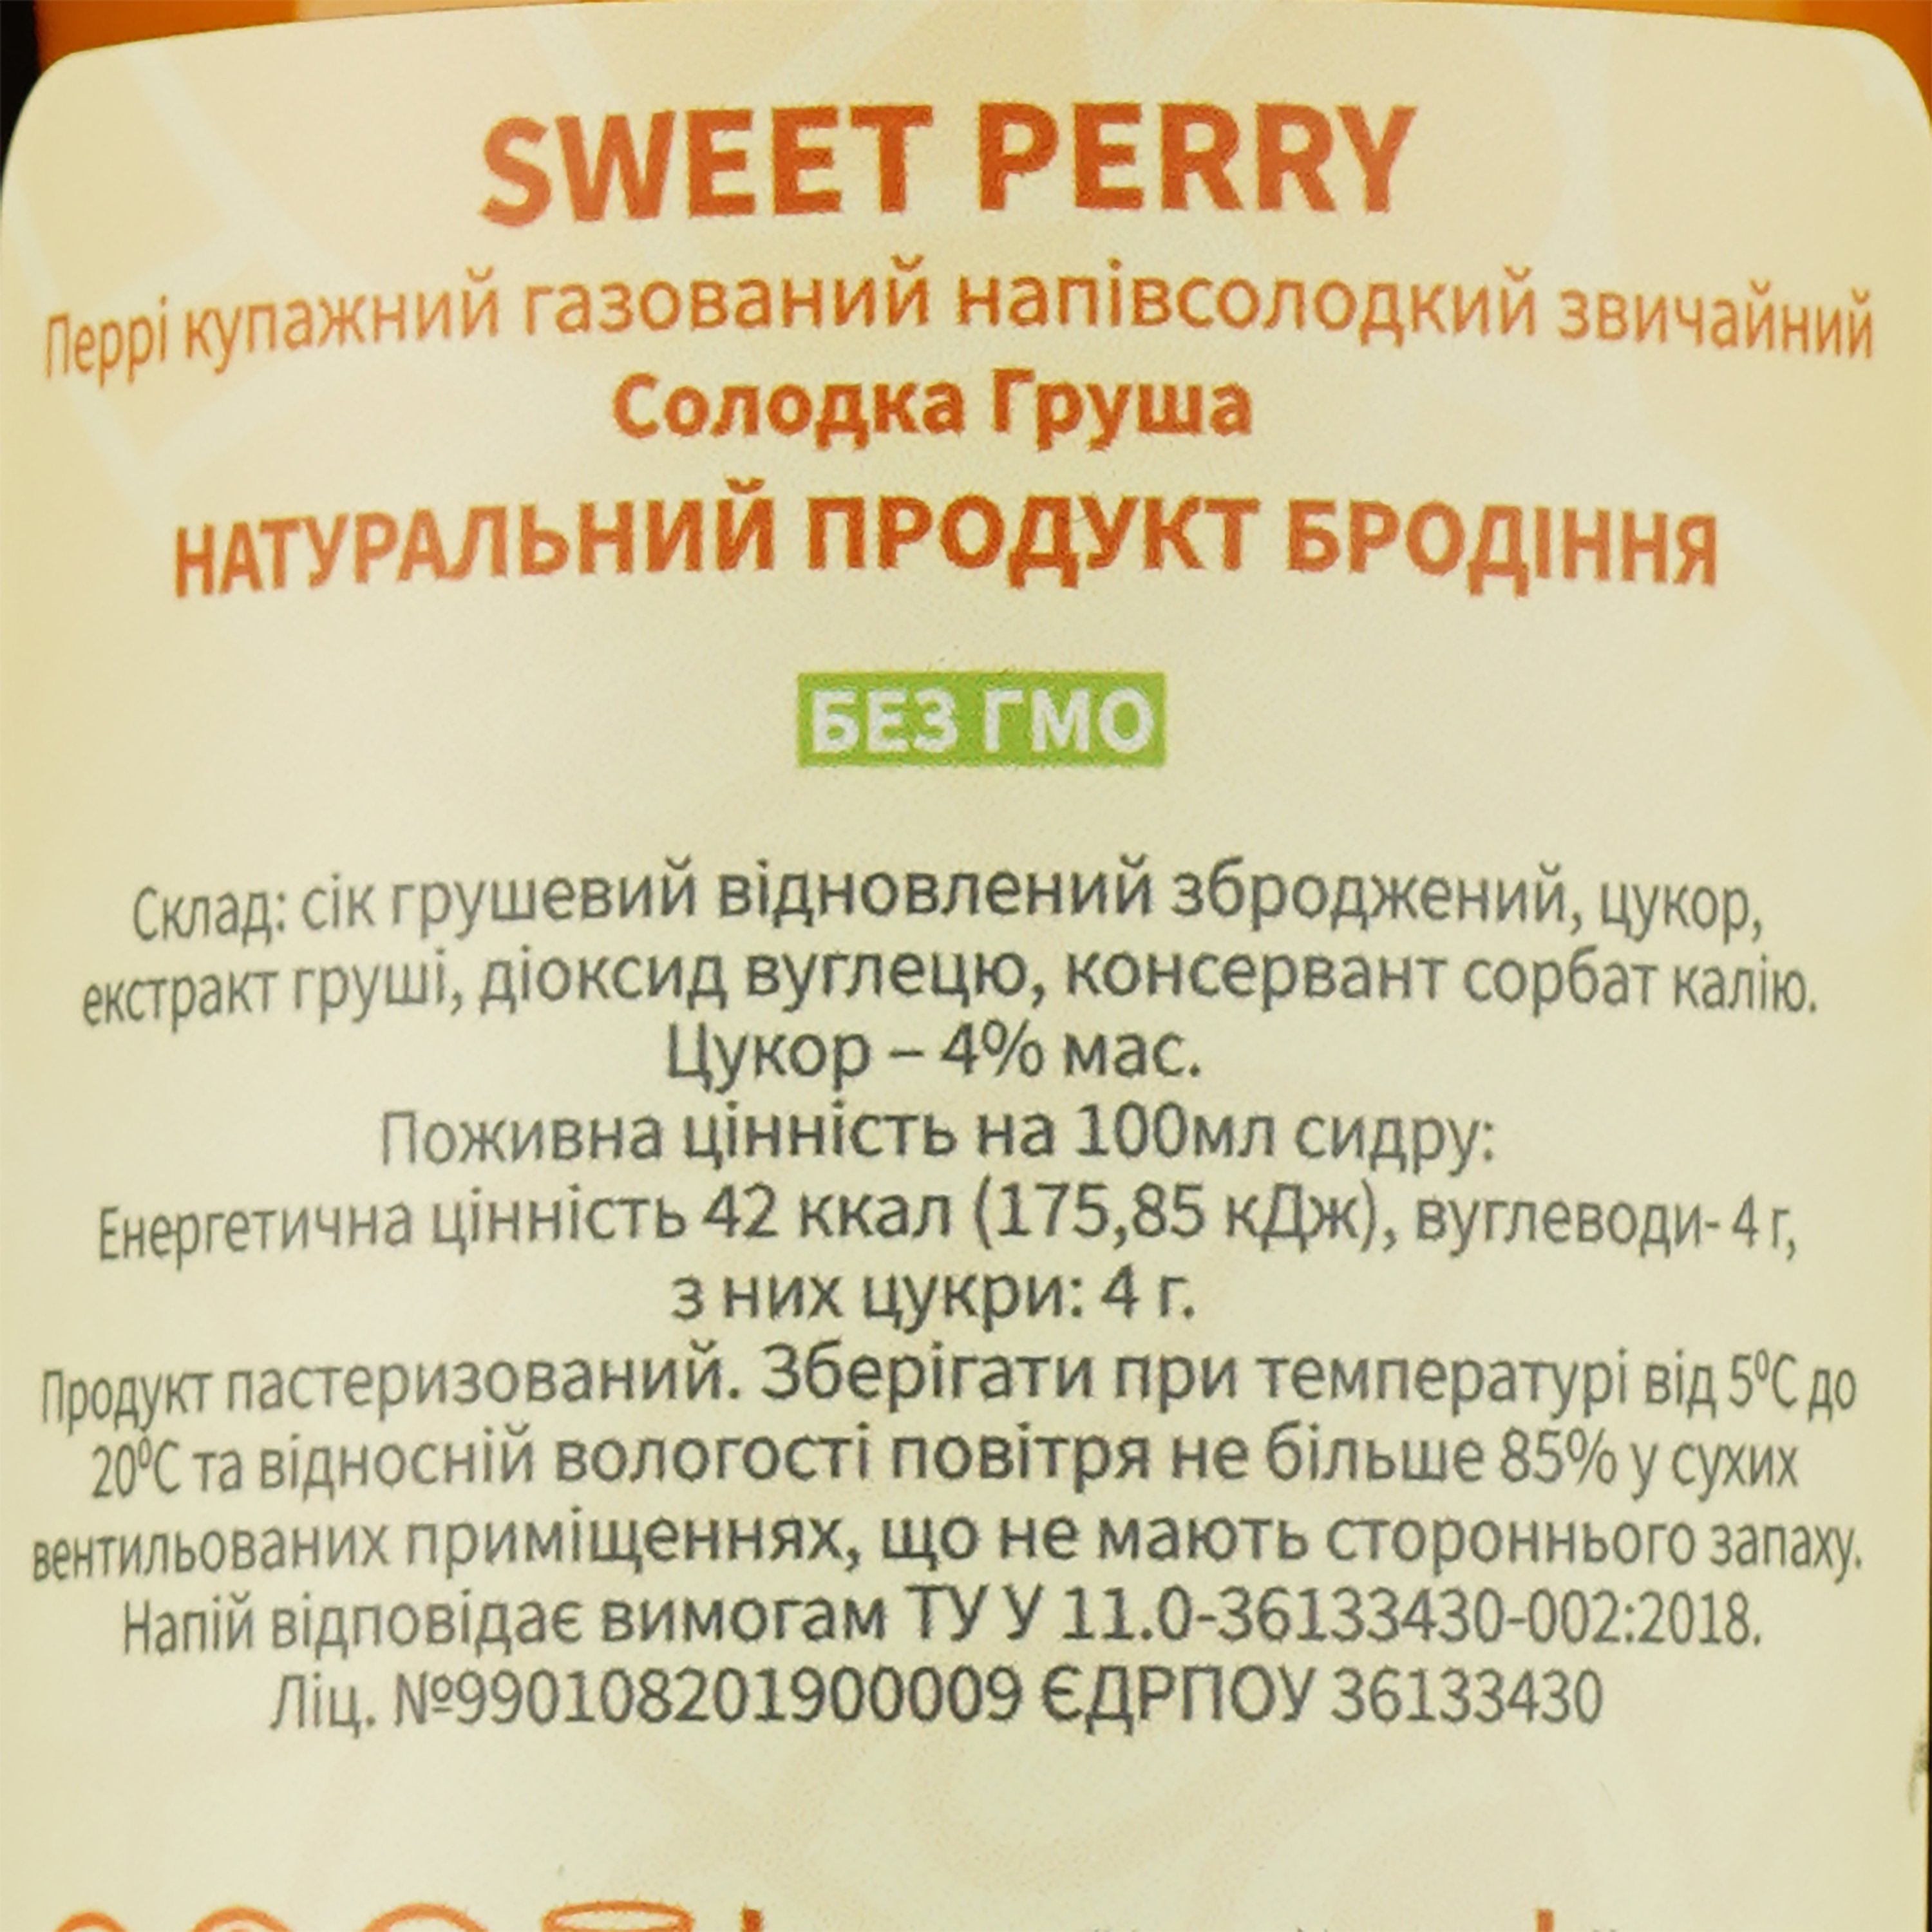 Перри Holiday Brewery Sweet Pear, полусладкий, 5,5%, 0,33 л - фото 3